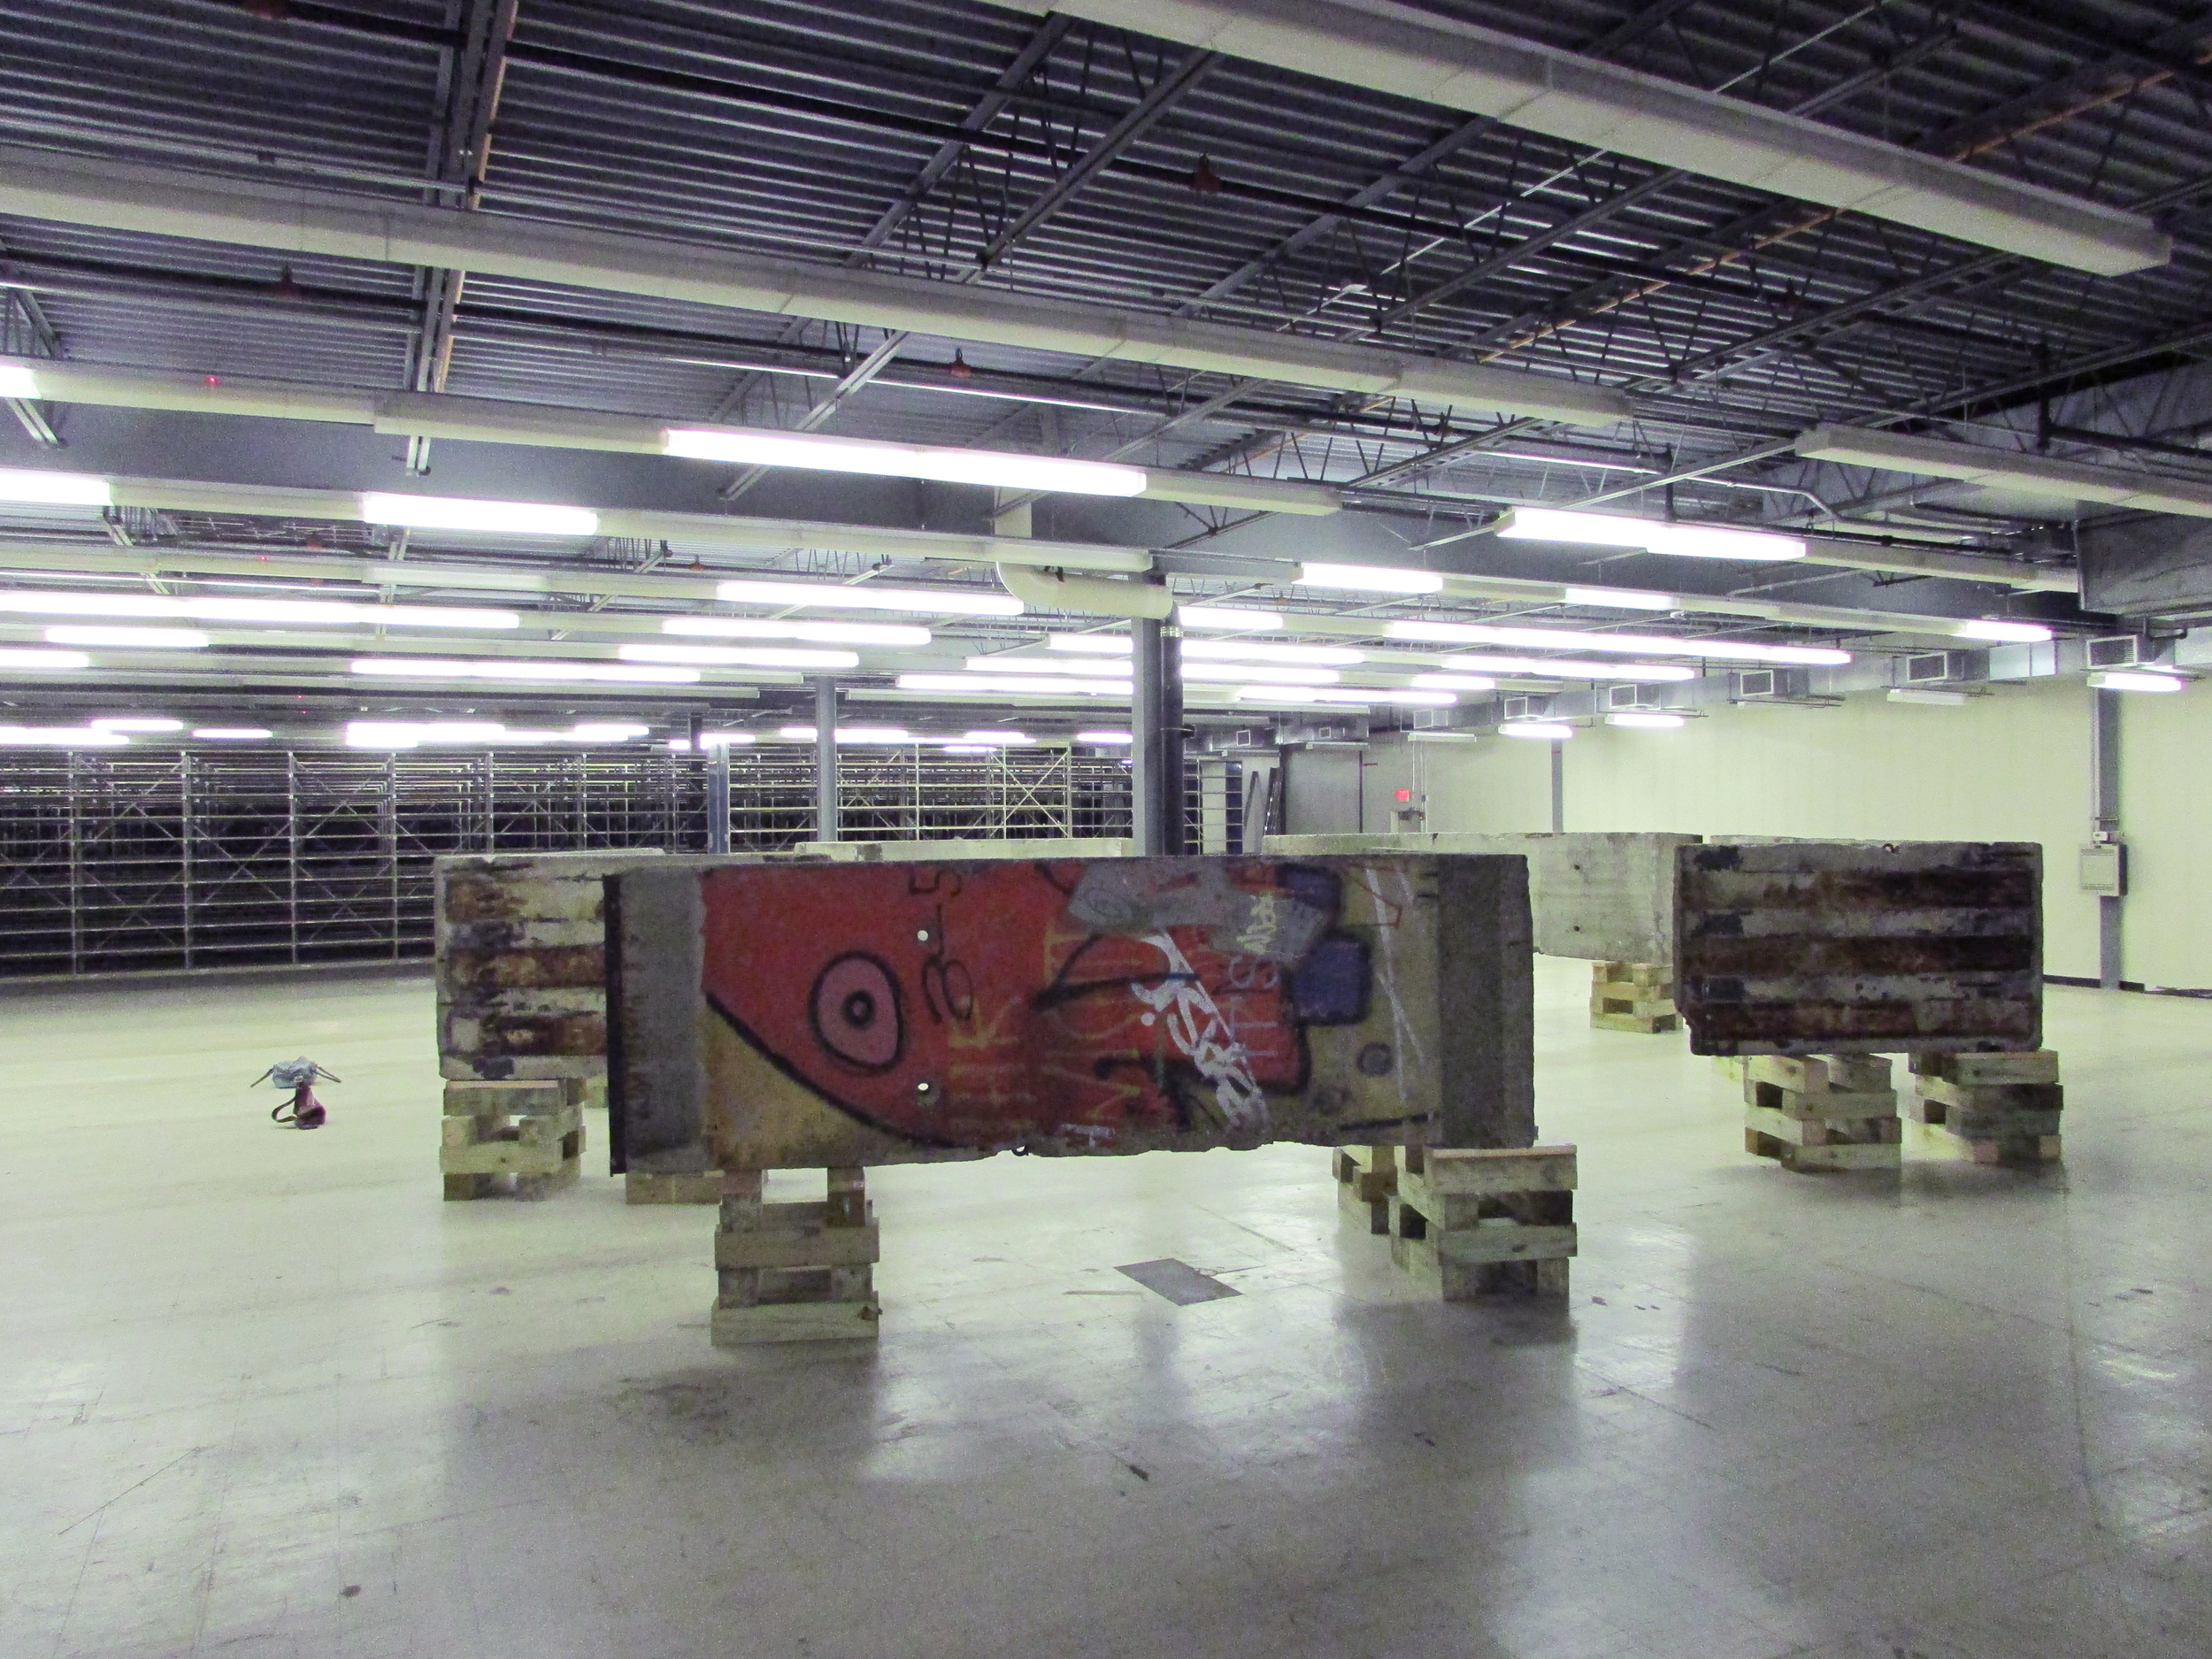  The segments were moved to a warehouse for conservation treatment.  Image   
  
 
  
    
  
 Normal 
 0 
 
 
 
 
 false 
 false 
 false 
 
 EN-US 
 JA 
 X-NONE 
 
  
  
  
  
  
  
  
  
  
  
 
 
  
  
  
  
  
  
  
  
  
  
  
  
    
  
 
 
 
 